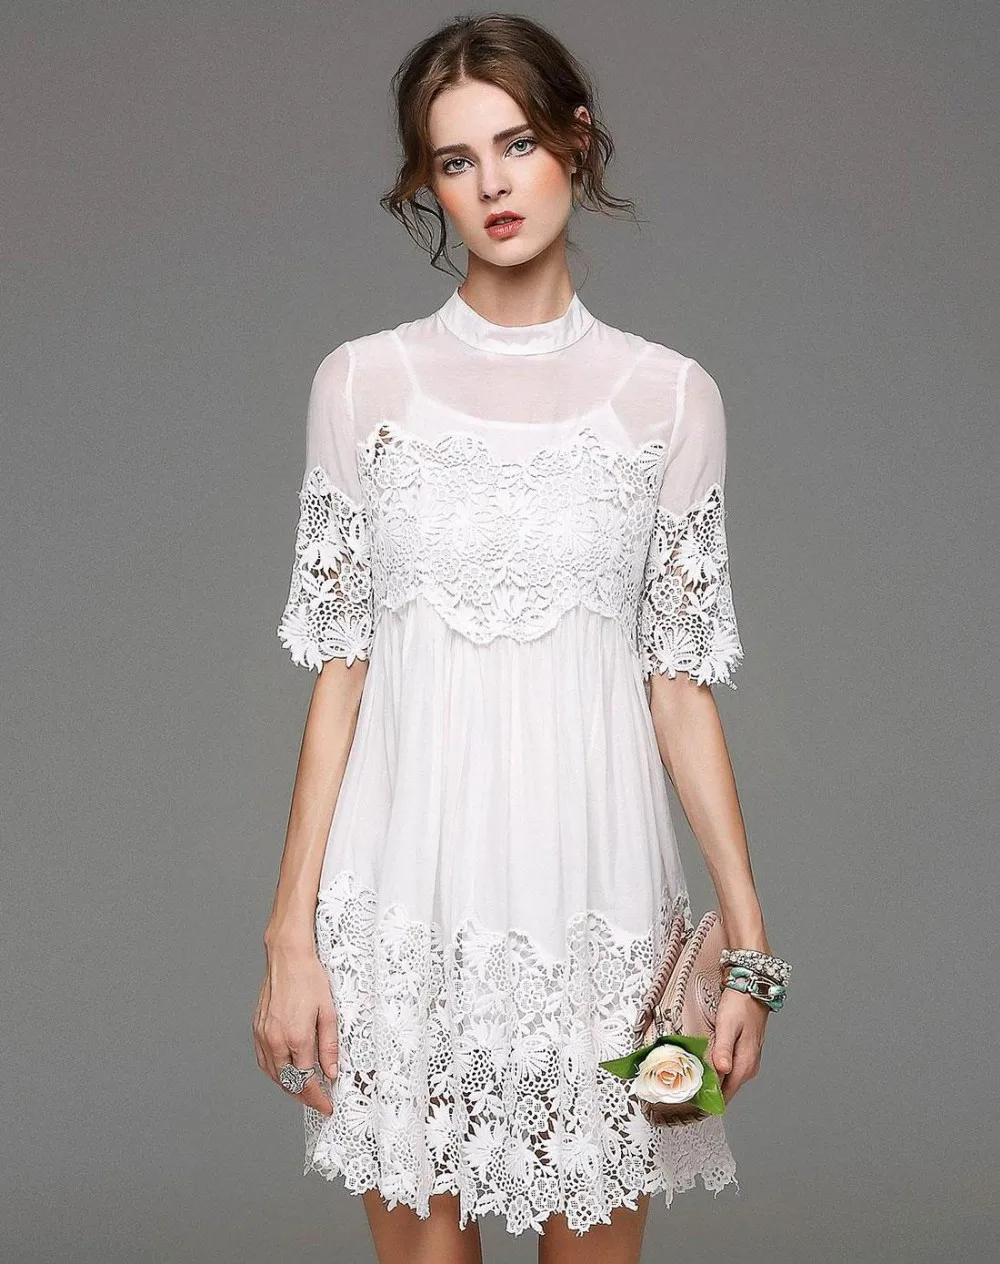 Western Women White Stand Collar Silk Embroidery Mini Dress - Buy ...